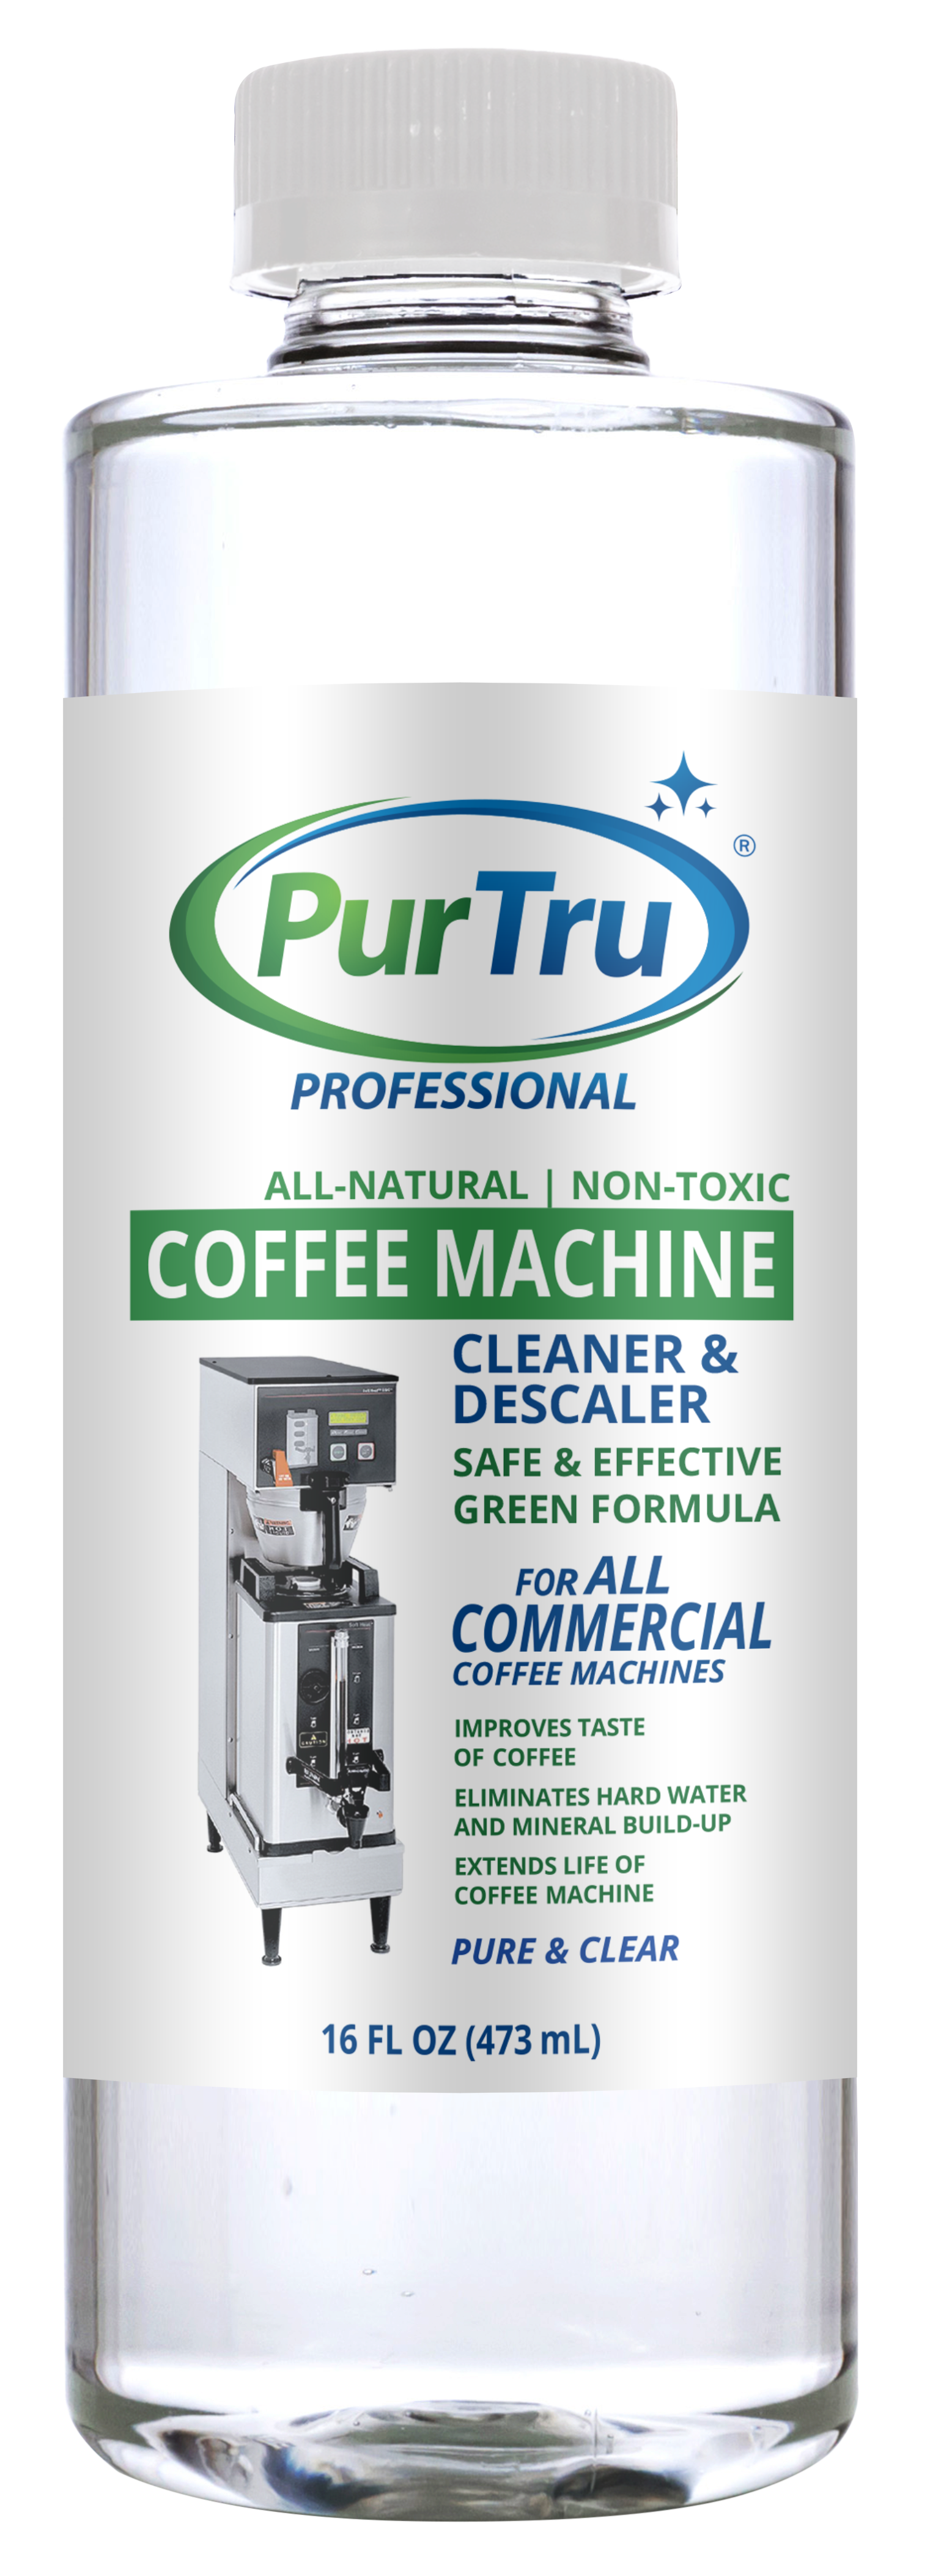 PurTru® PROFESSIONAL Coffee Machine Cleaning & Descaling Solution